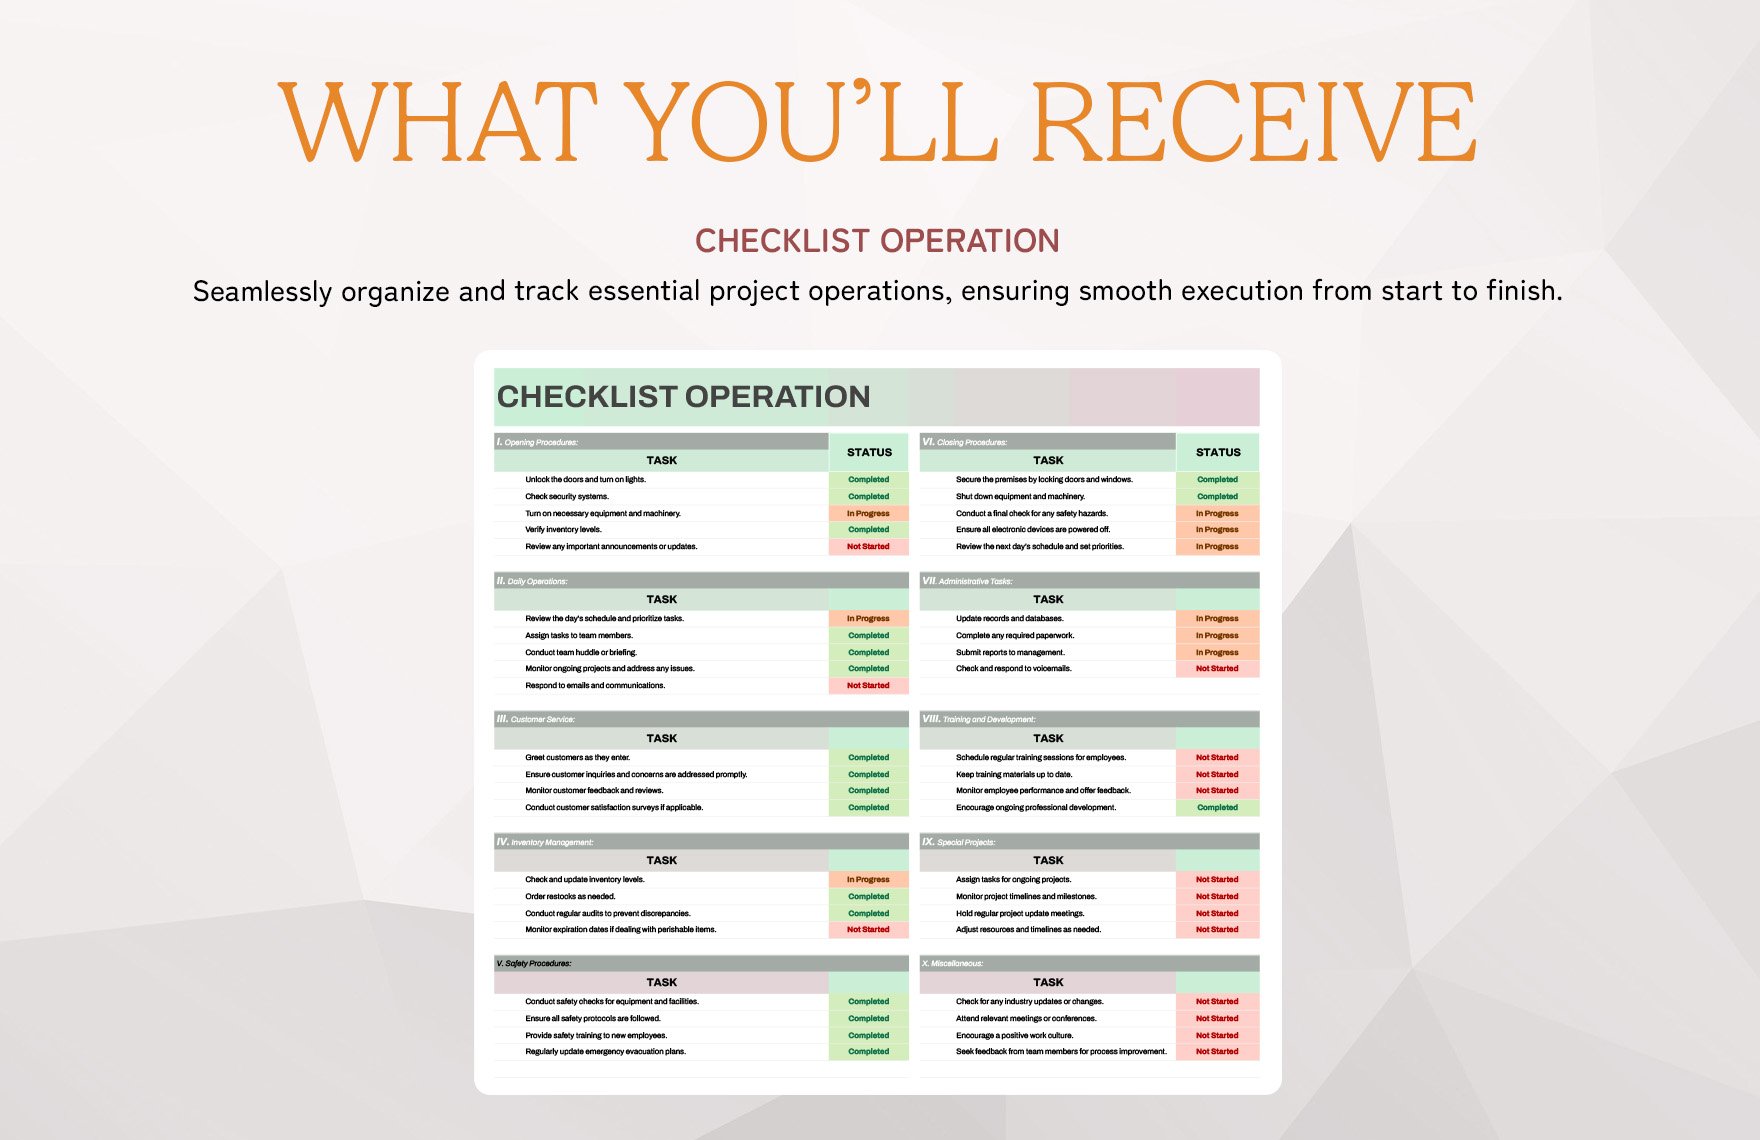 Checklist Operation Template